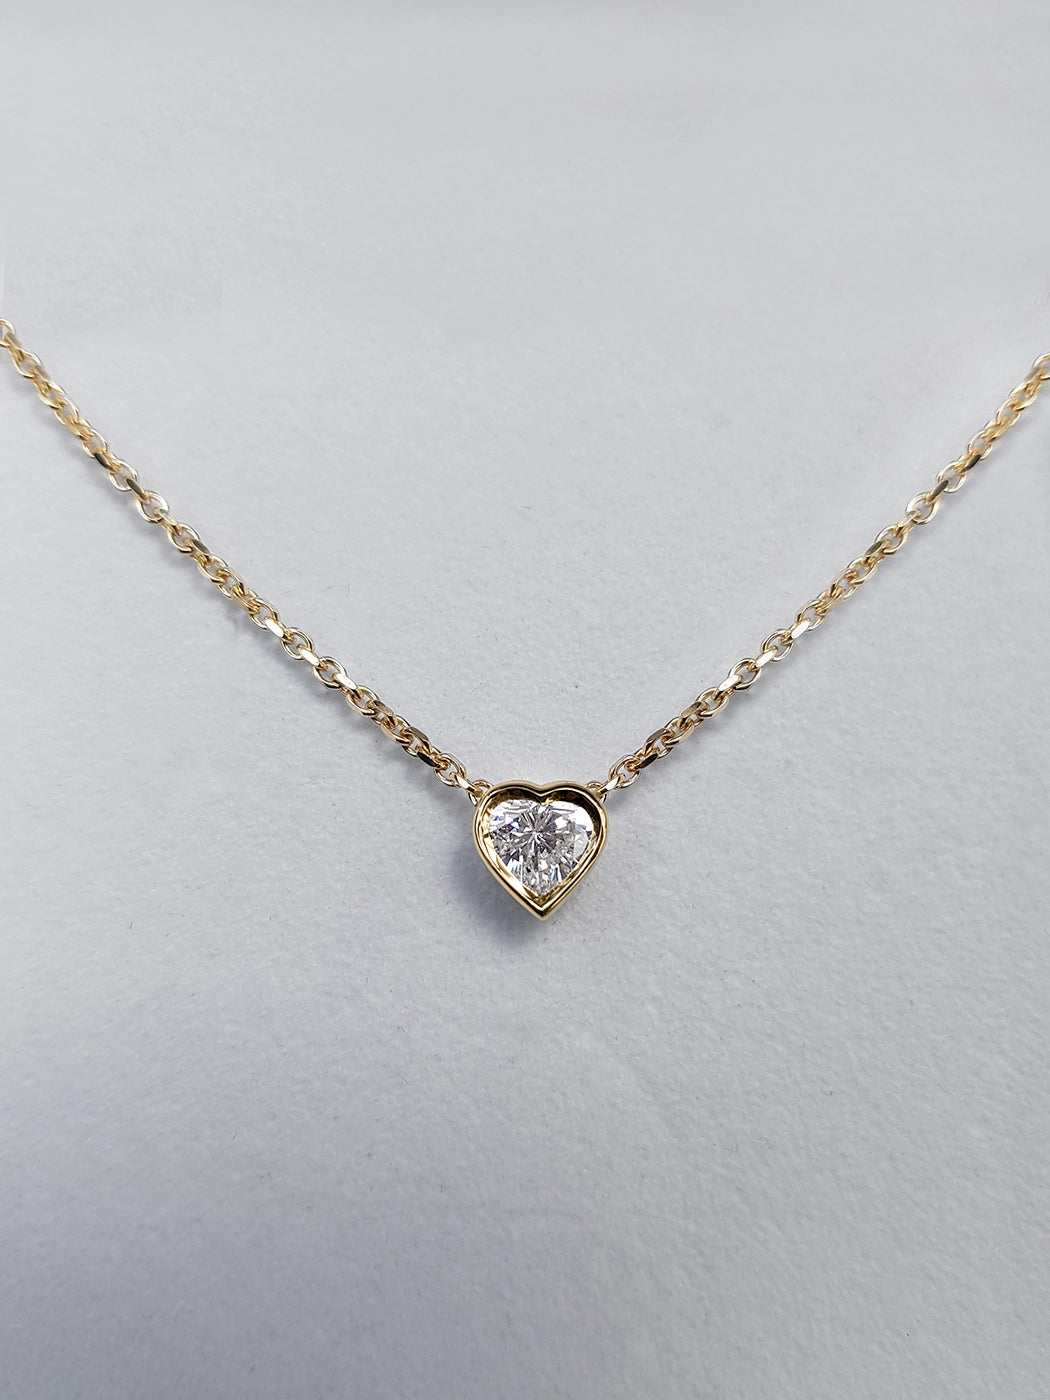 files/STEPHANIE-VAN-ZWAM-Heart-diamond-necklace.webp